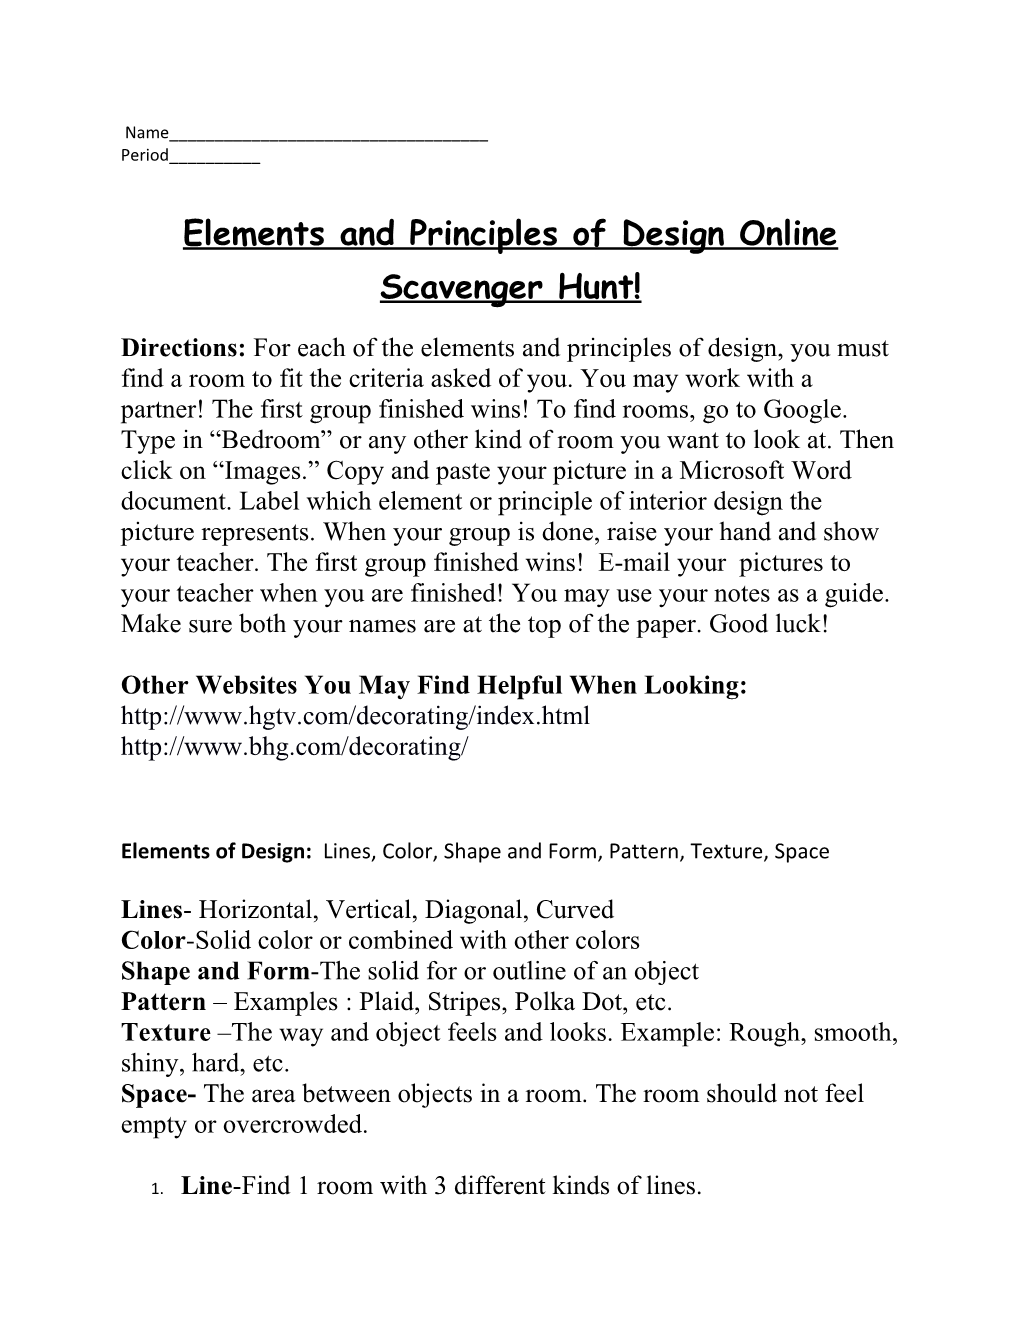 Elements and Principles of Designonline Scavenger Hunt!